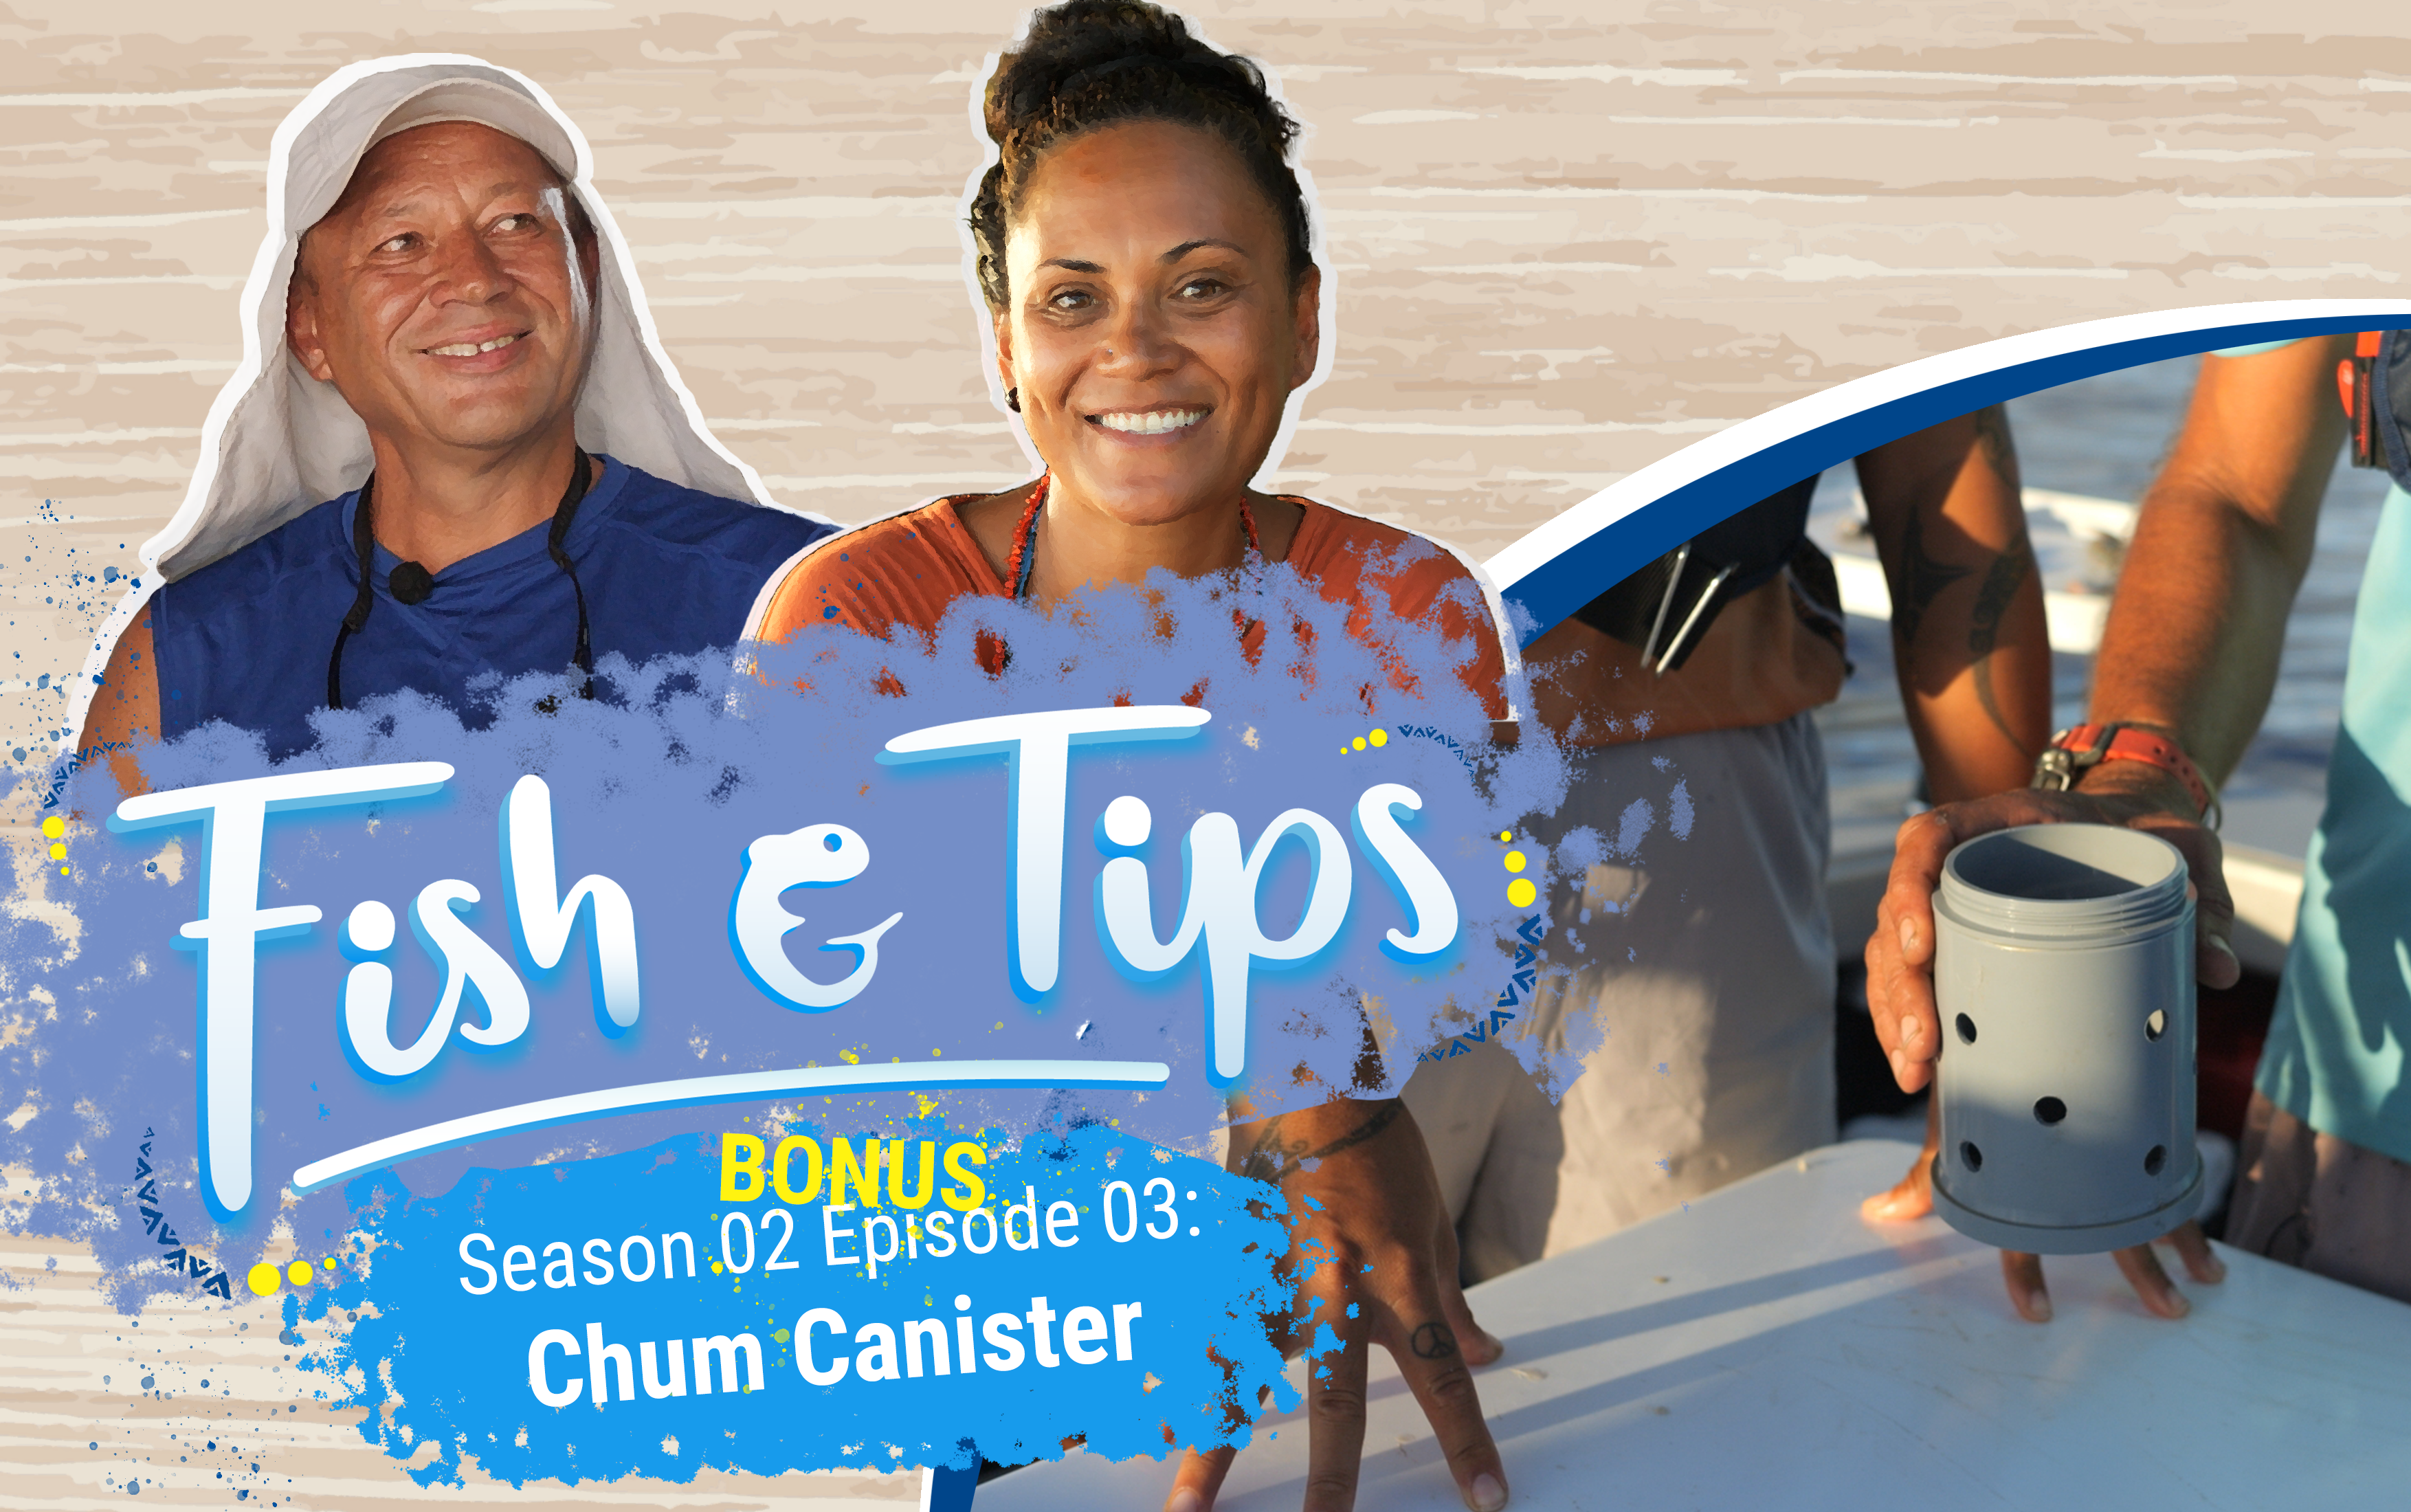 Chum canister - Fish and tips S2 Bonus 3 (English)